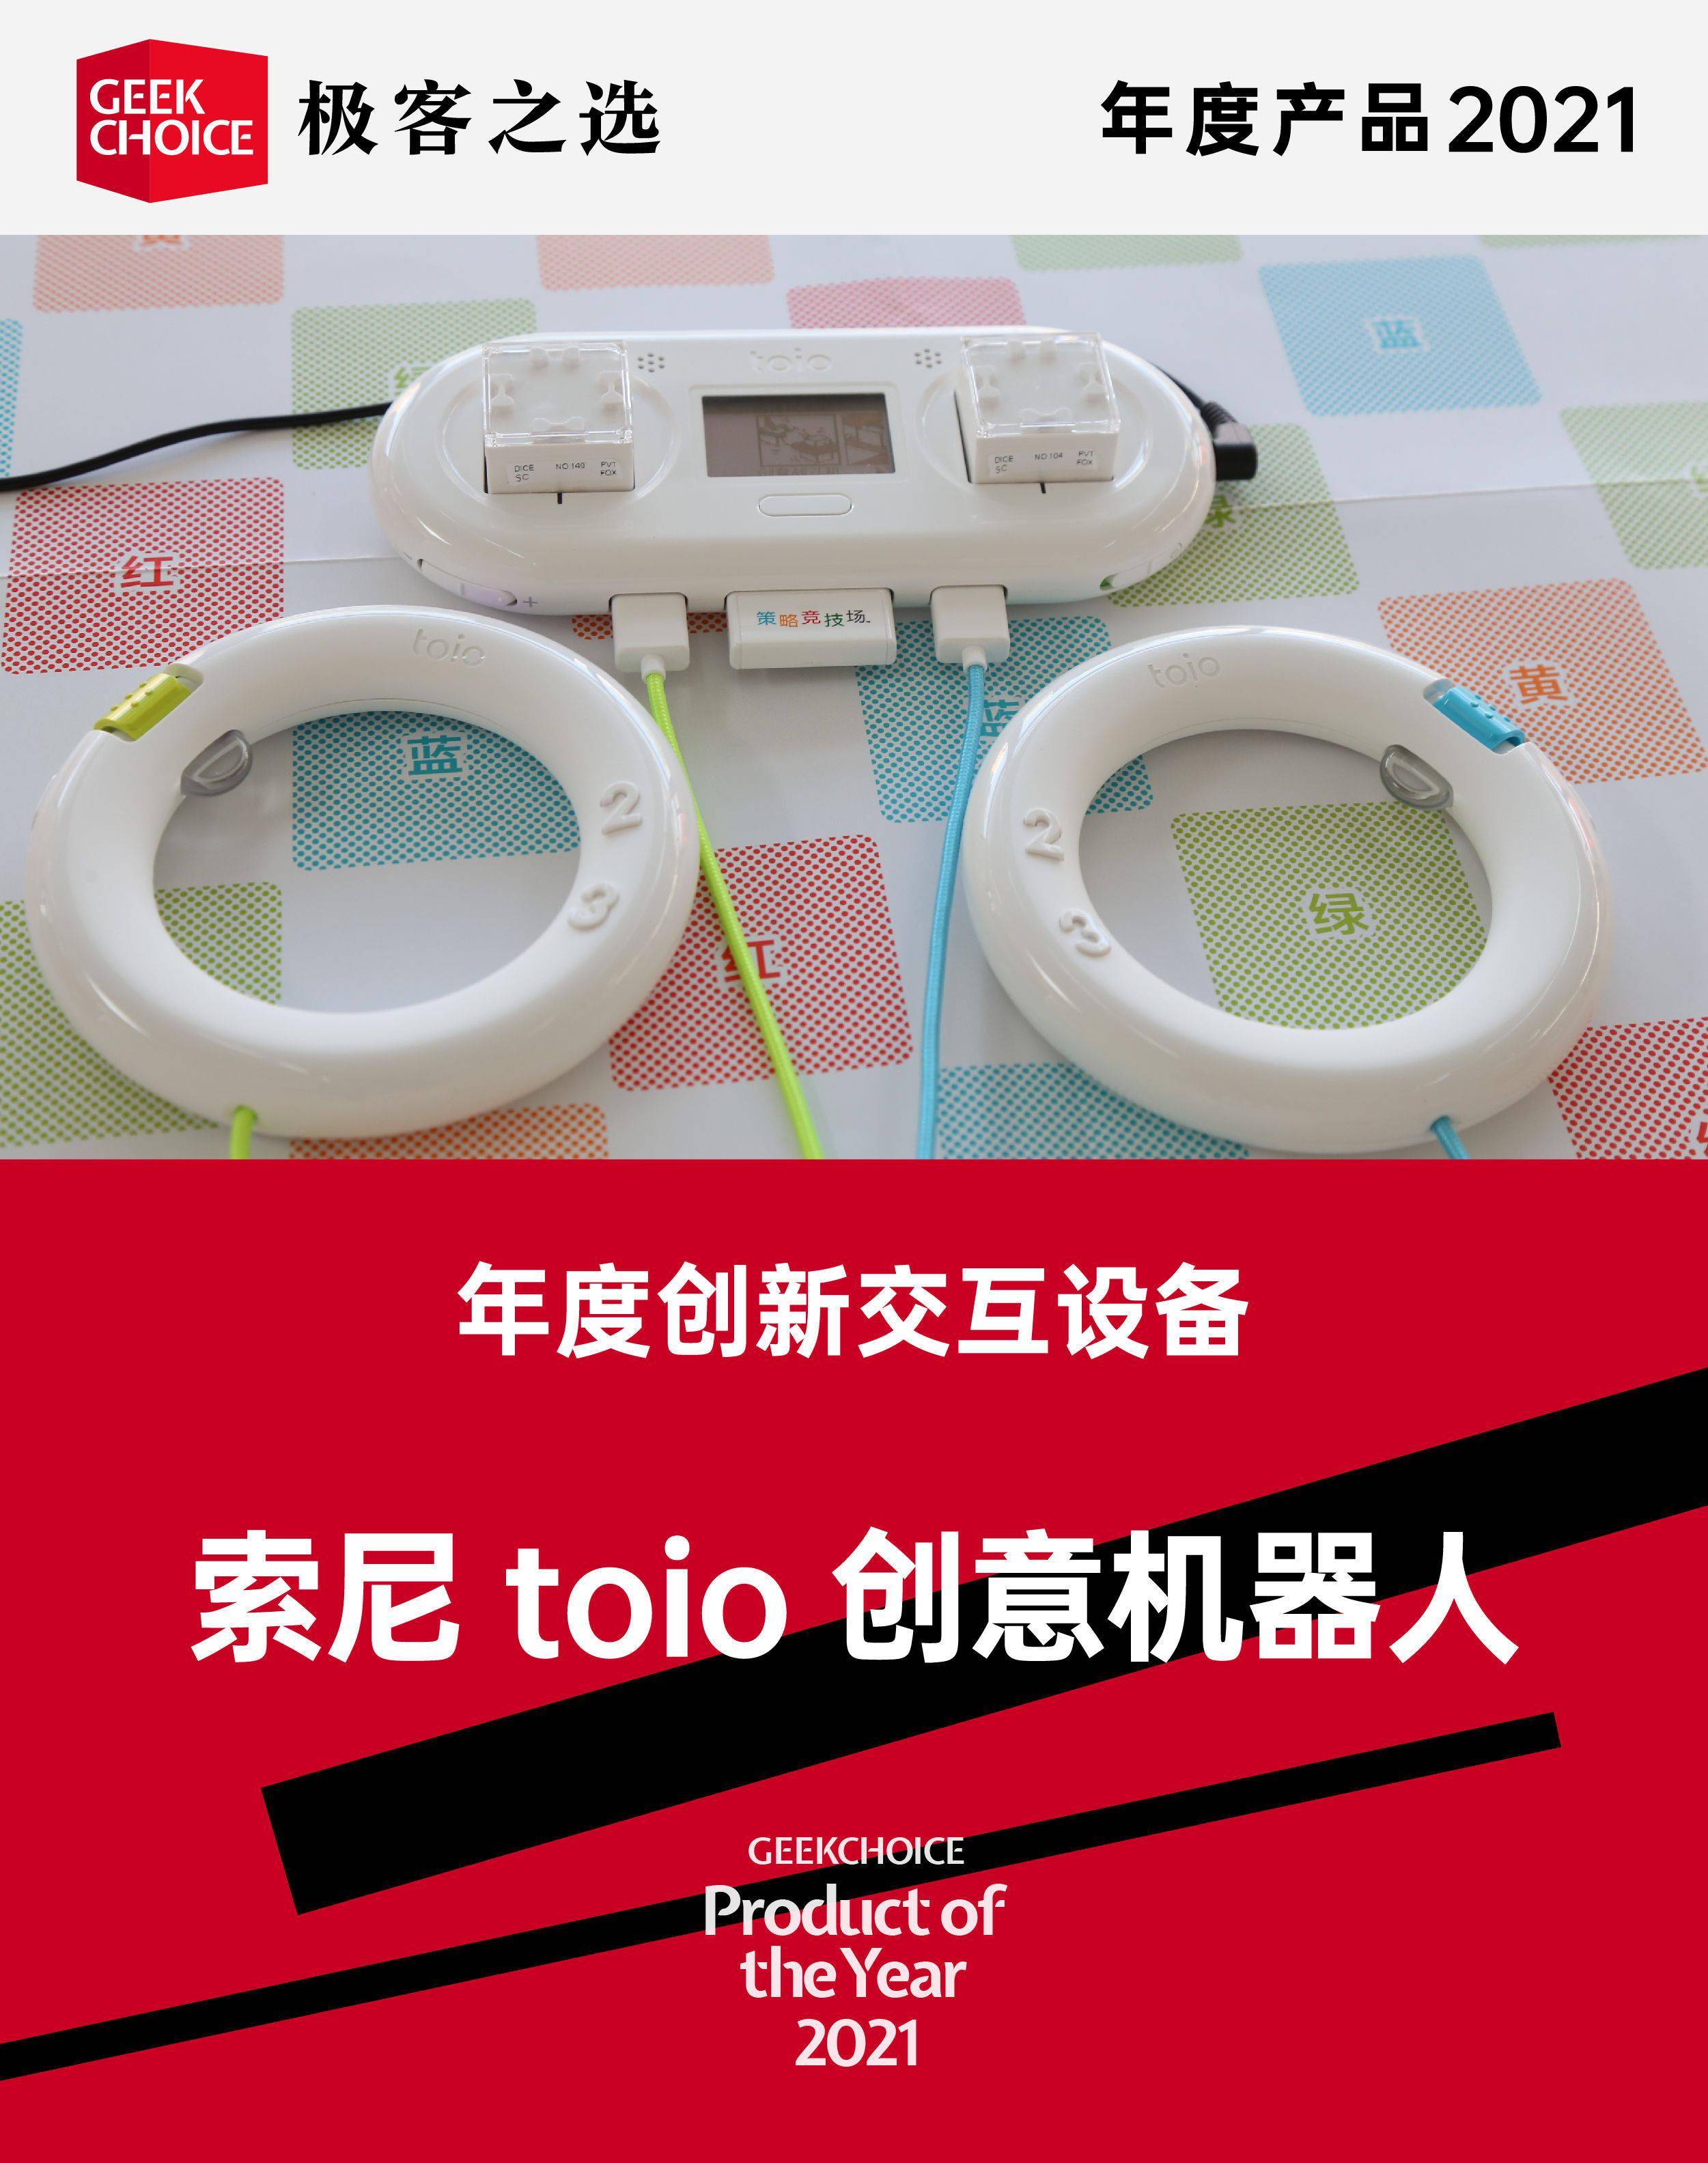 toio|极客之选年度产品丨年度创新交互设备：索尼 toio 创意机器人